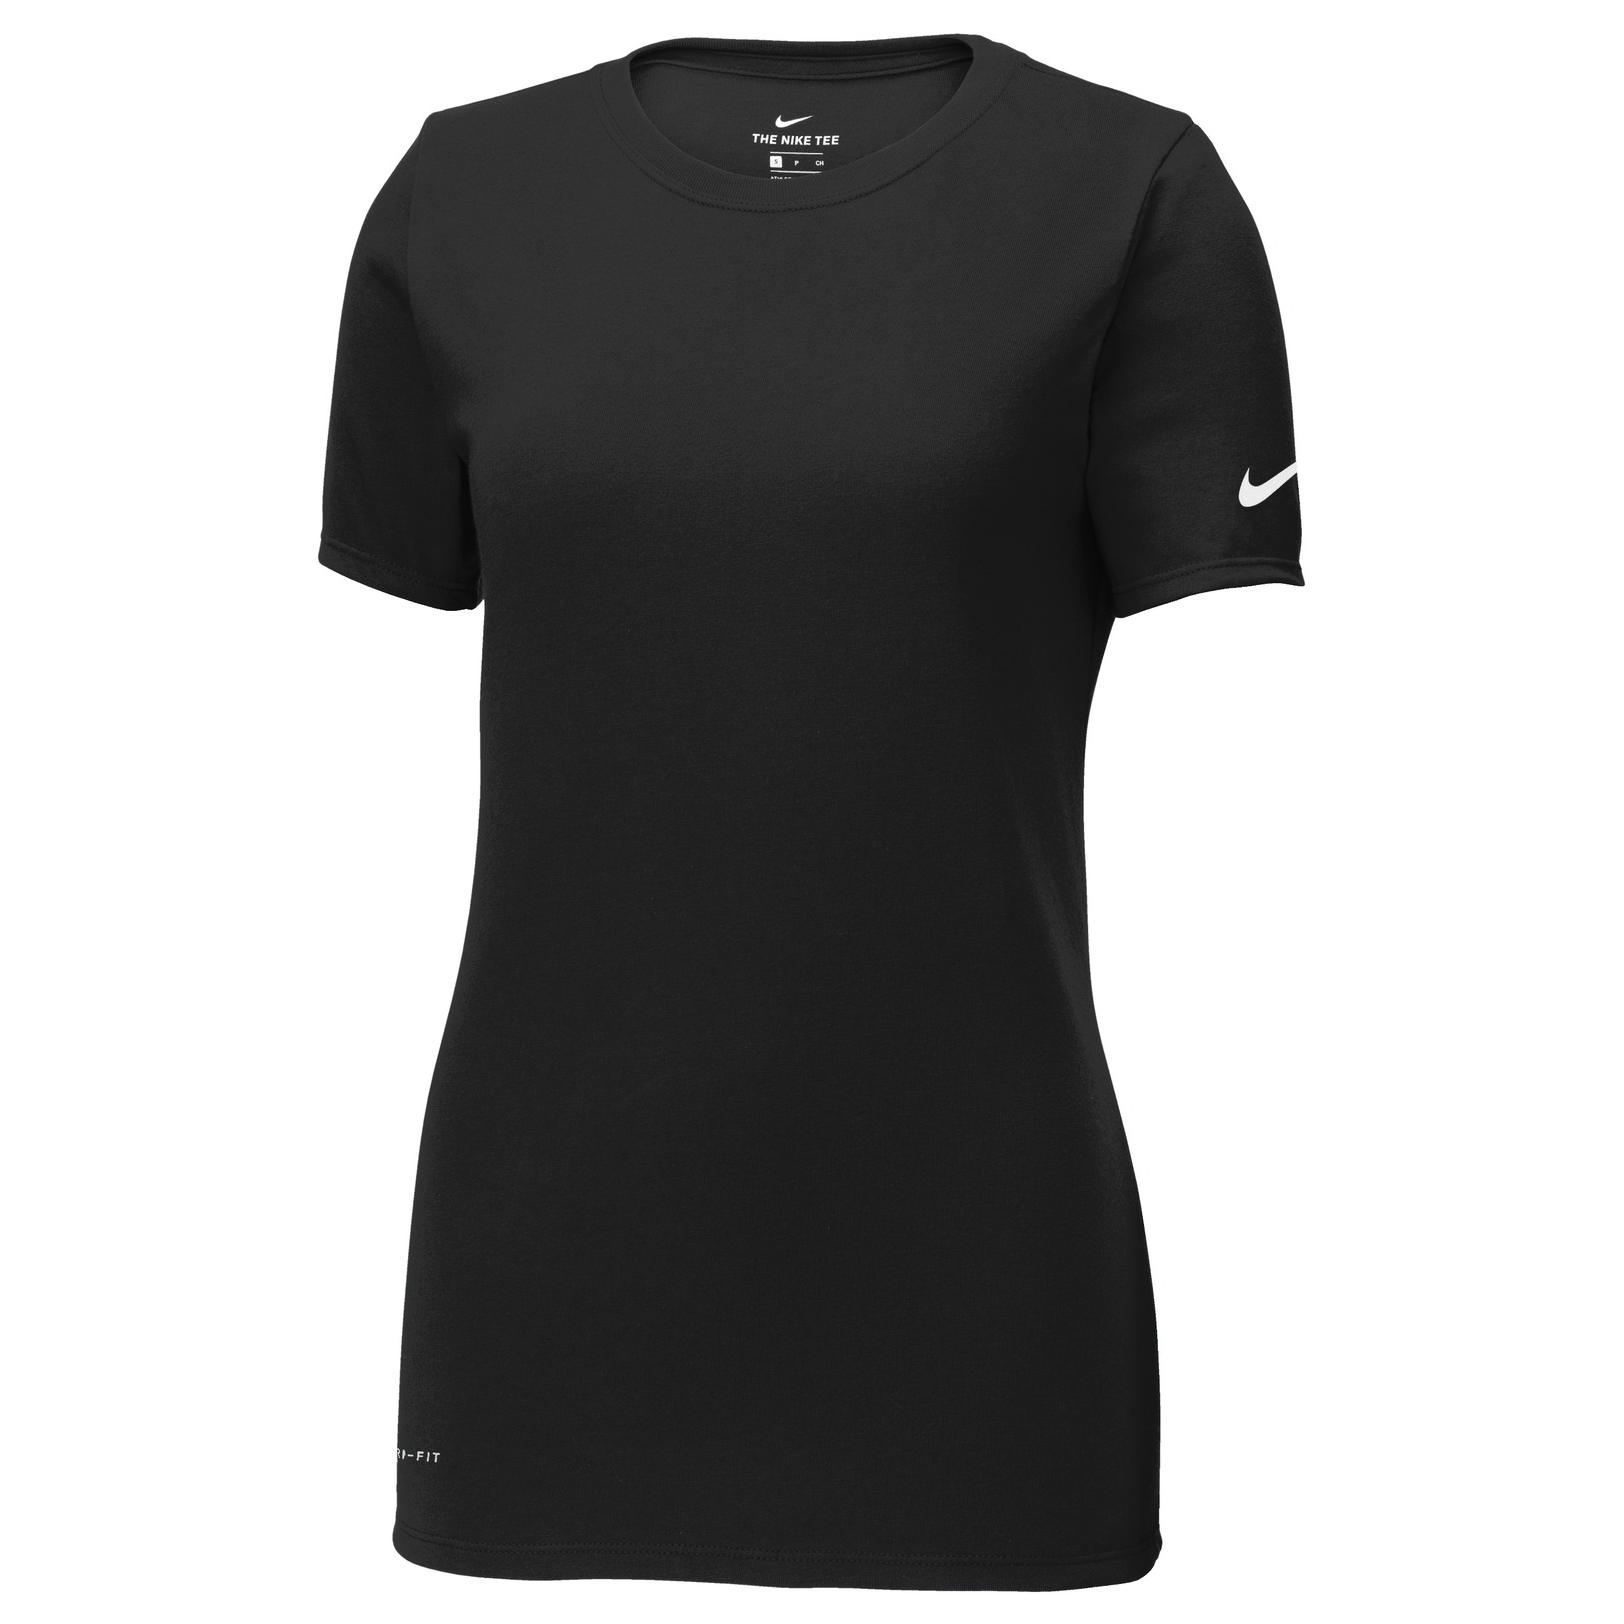 Nike NKBQ5234 Ladies Dri-FIT Cotton/Poly Scoop Neck Tee - Black ...